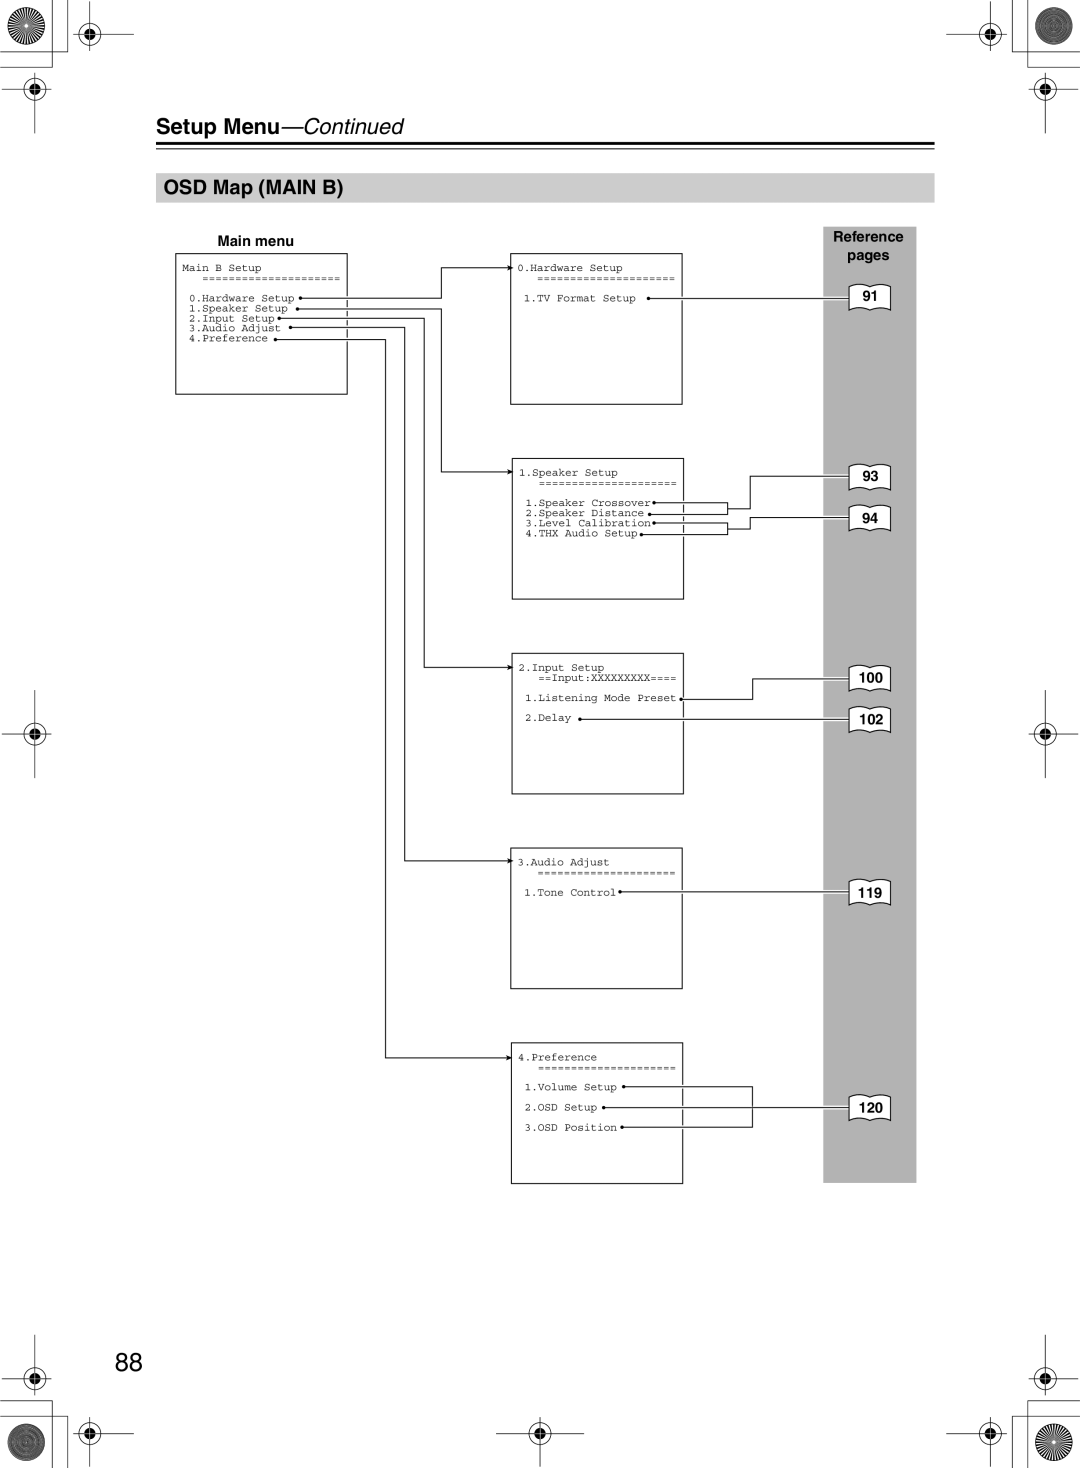 Integra RDC-7.1 instruction manual OSD Map MAIN B, Setup Menu-Continued, Main menu, Reference pages 91 93 94, 100 102 